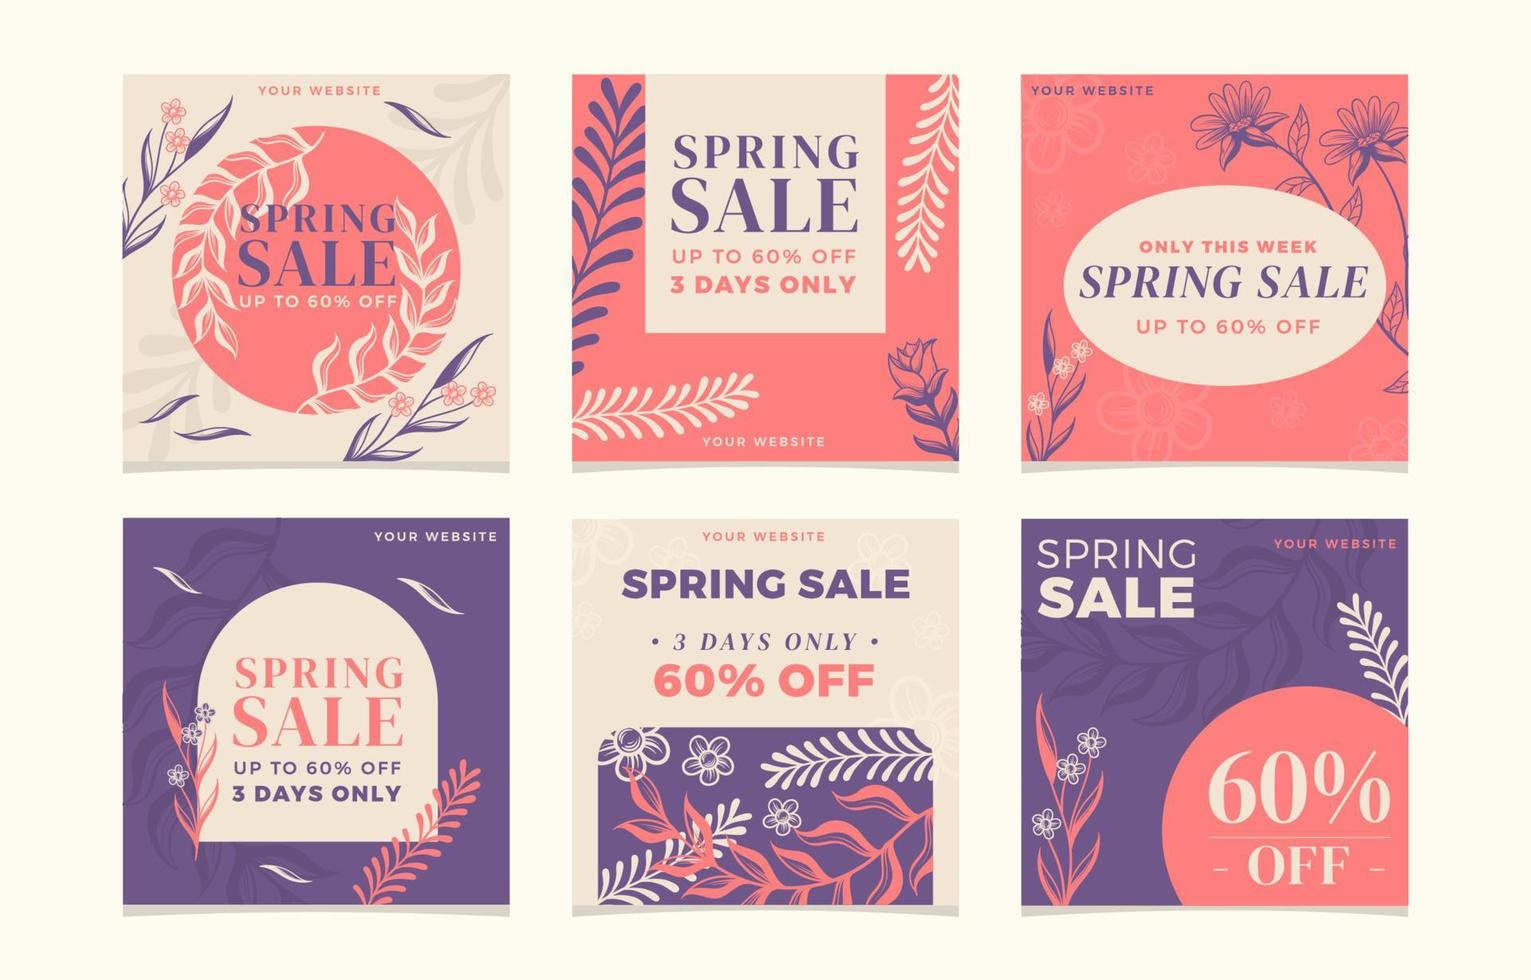 Handrawn Flower Spring Sale Instagram Posts vector